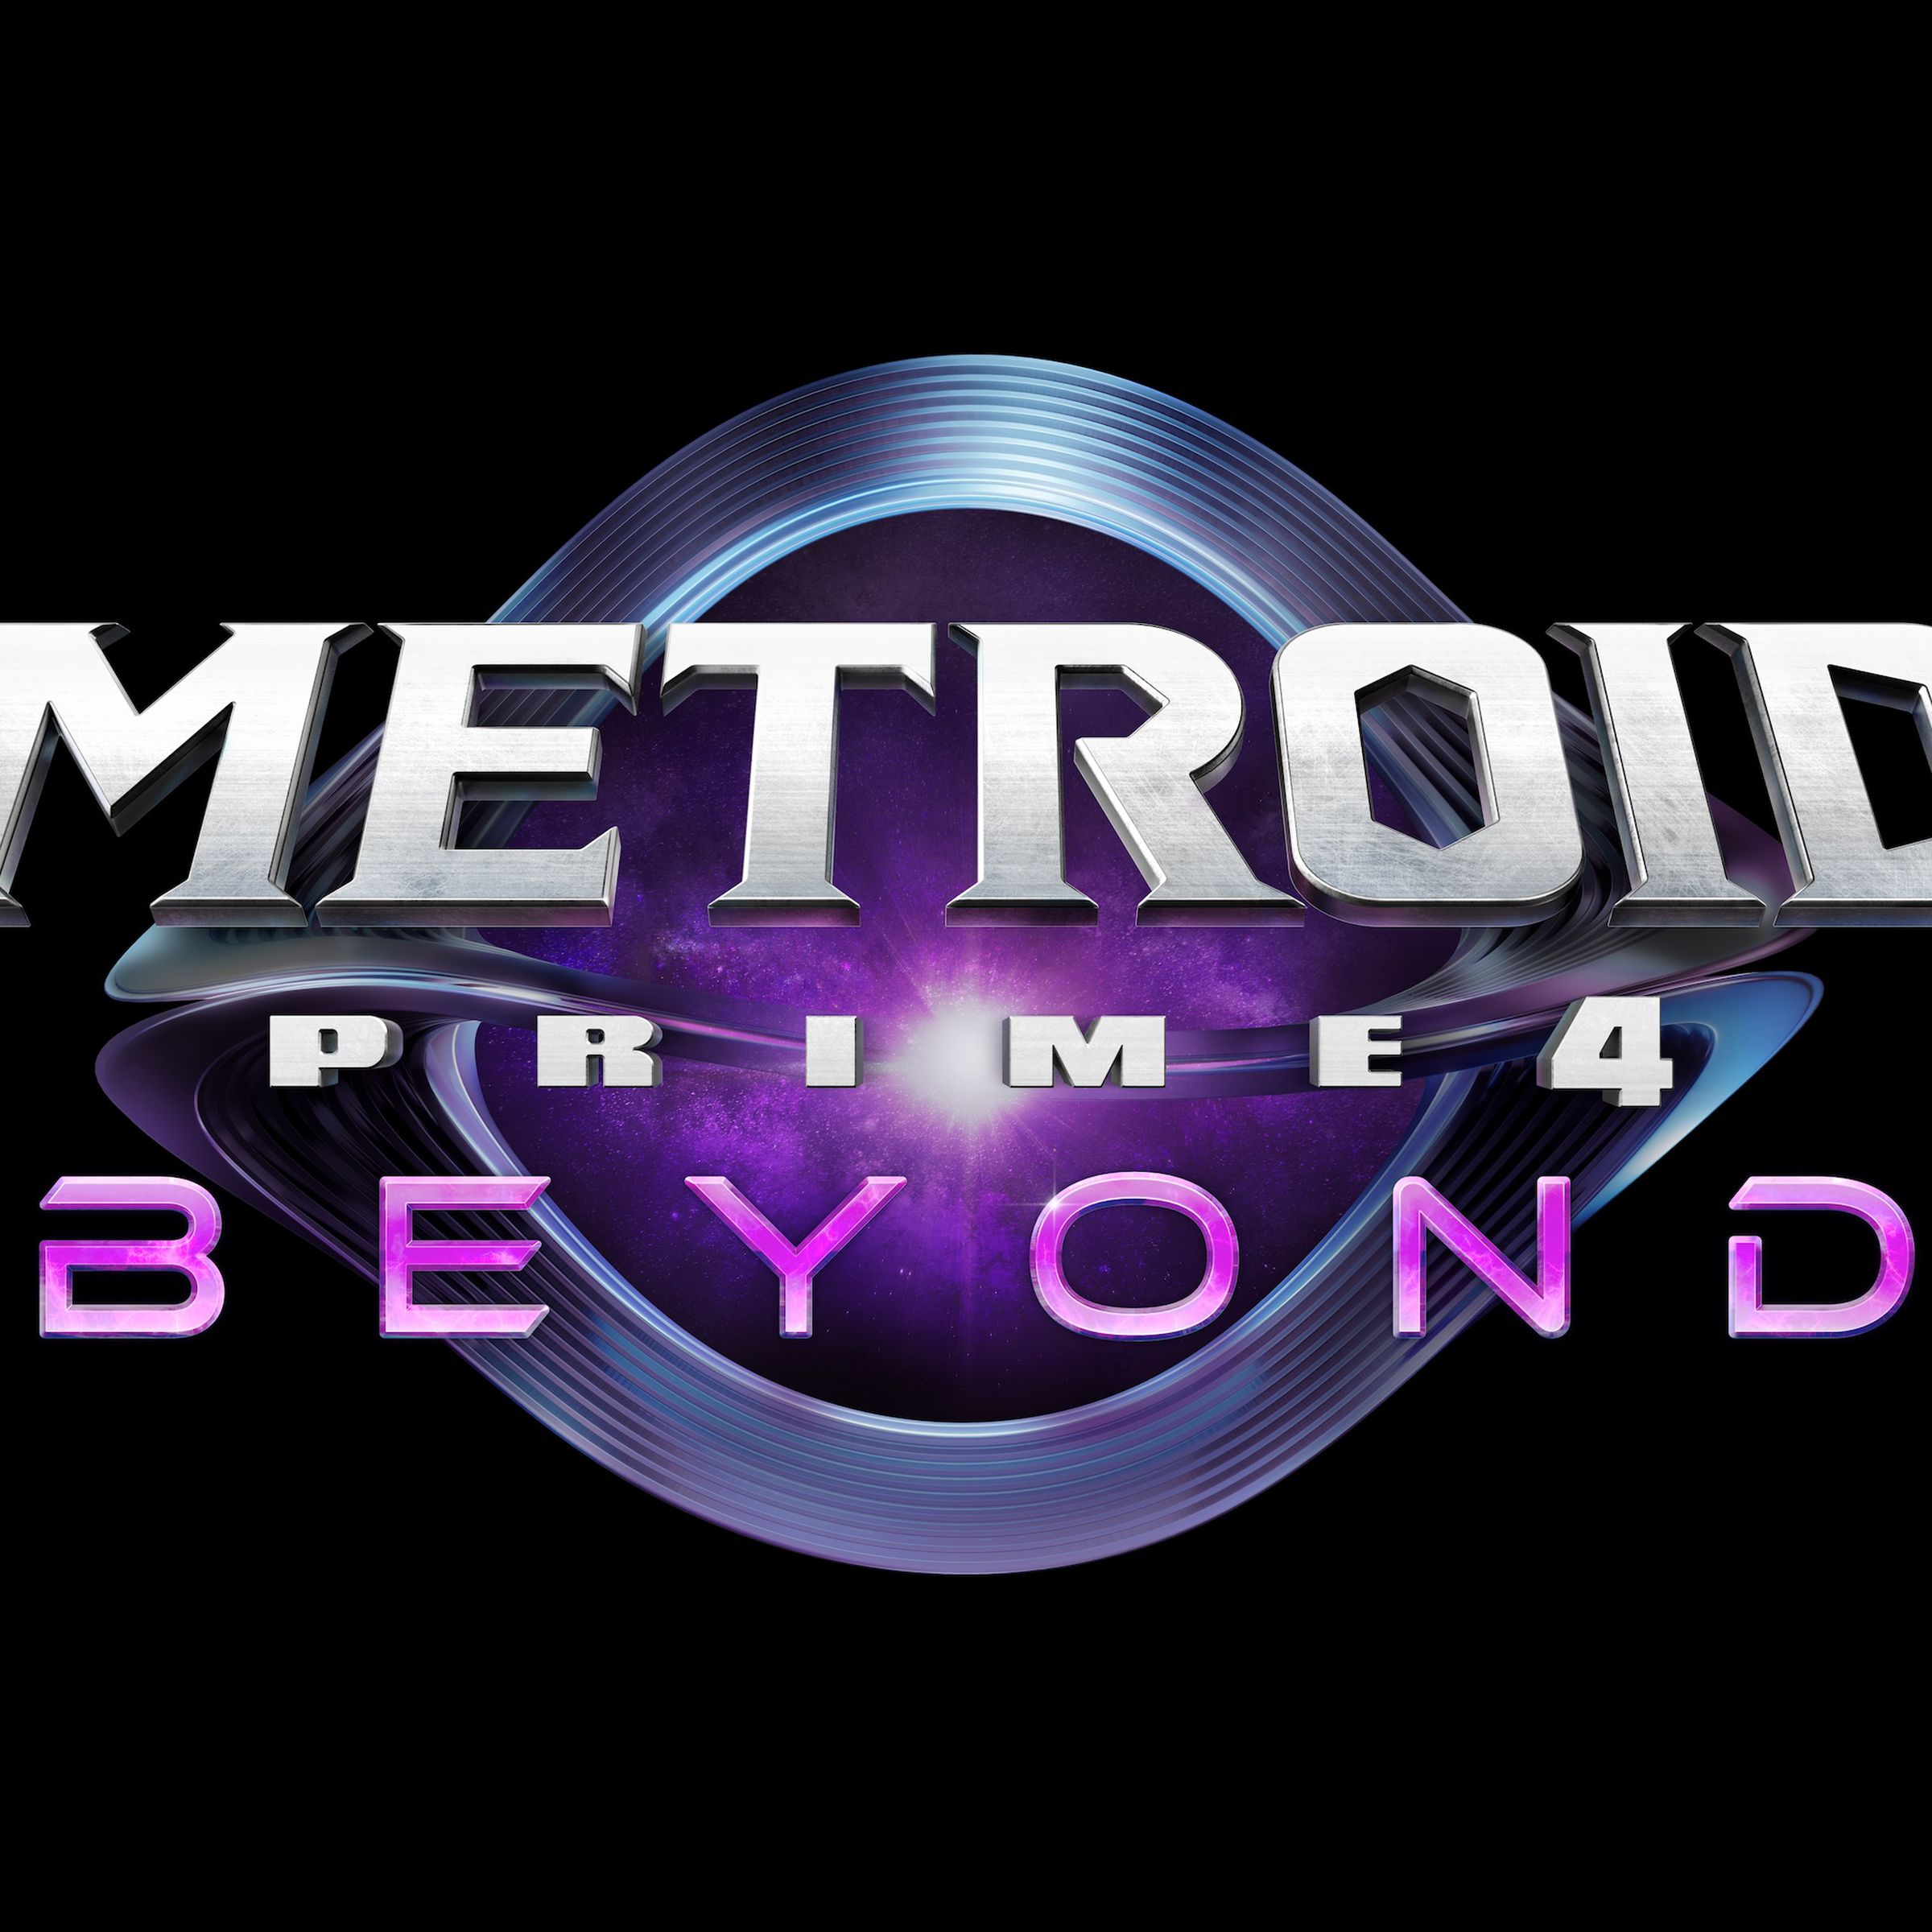 The logo for Metroid Prime 4: Beyond.